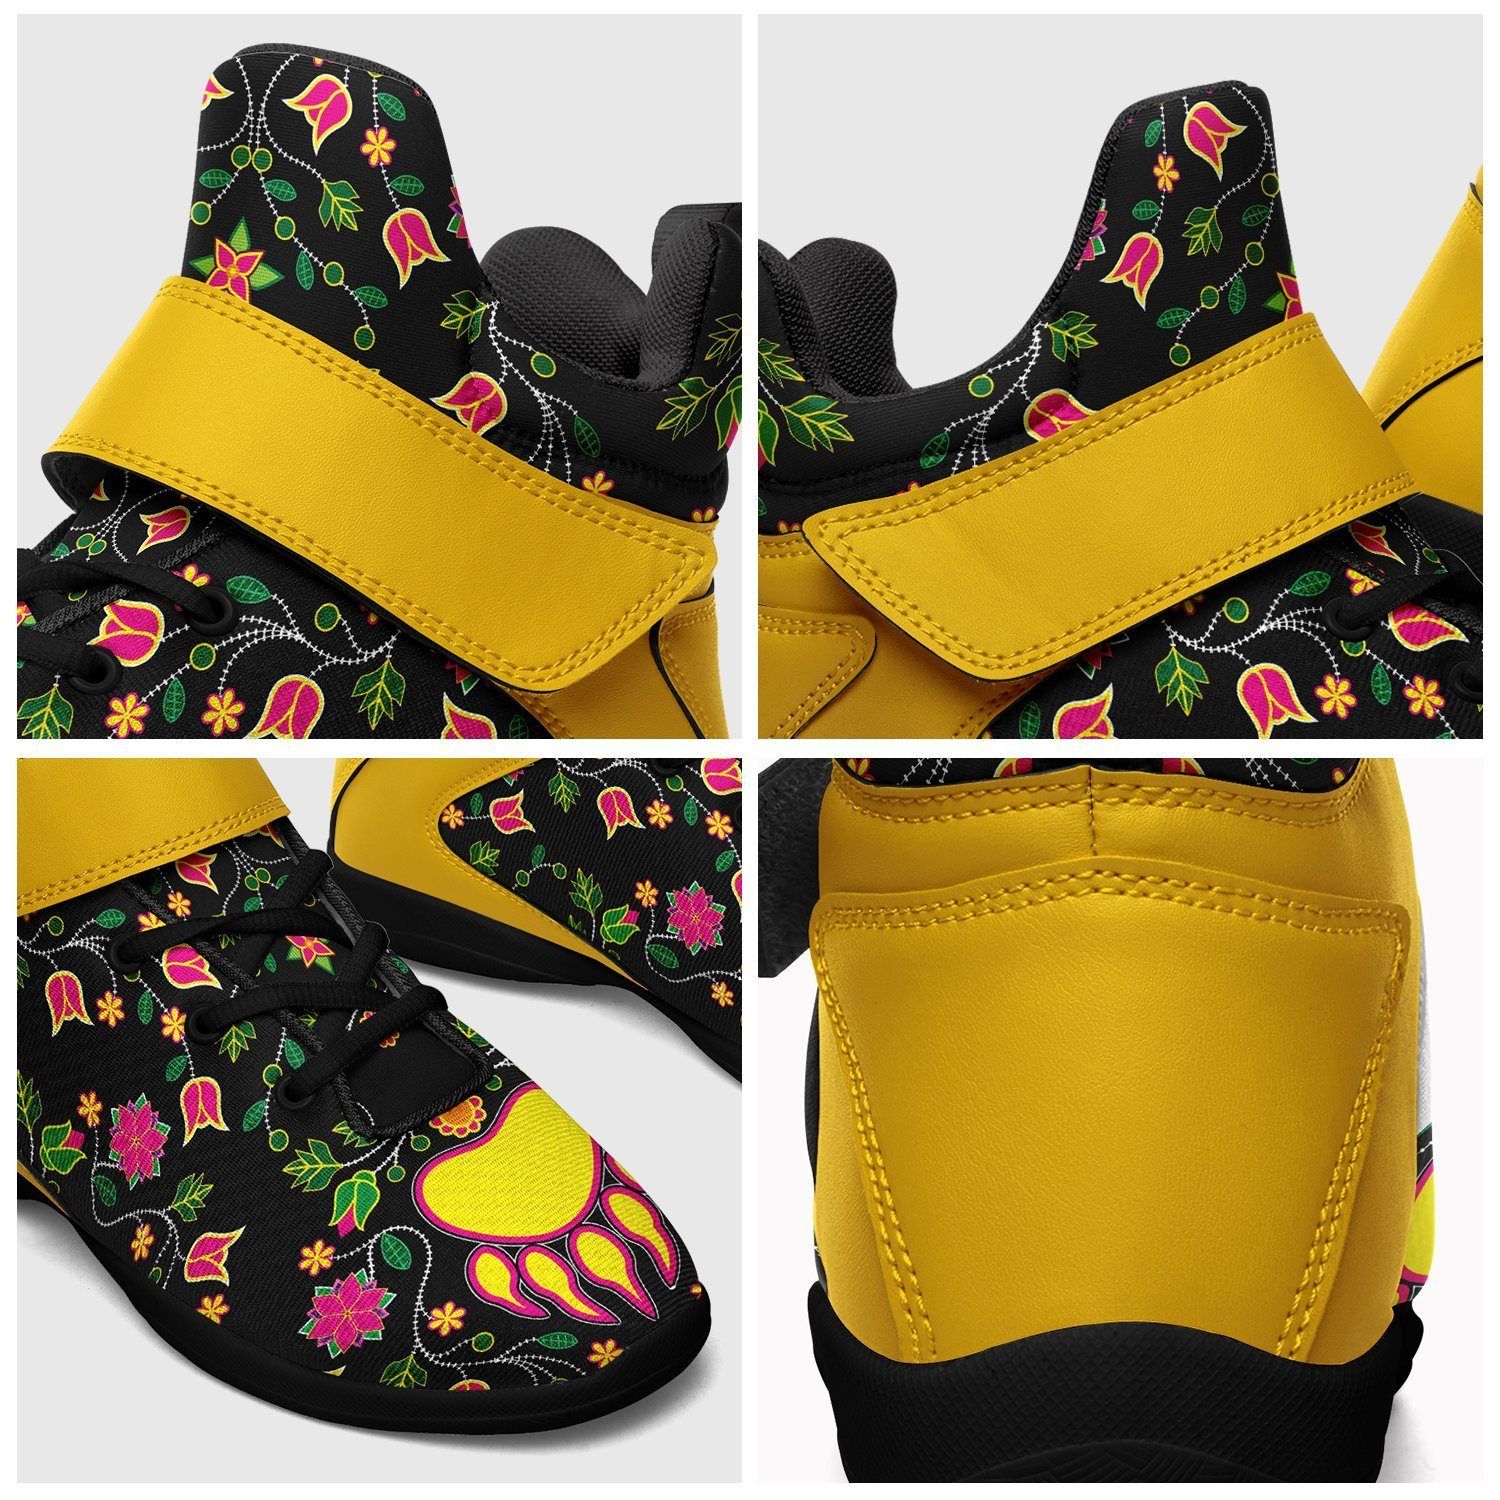 Floral Bearpaw Ipottaa Basketball / Sport High Top Shoes - Black Sole 49 Dzine 